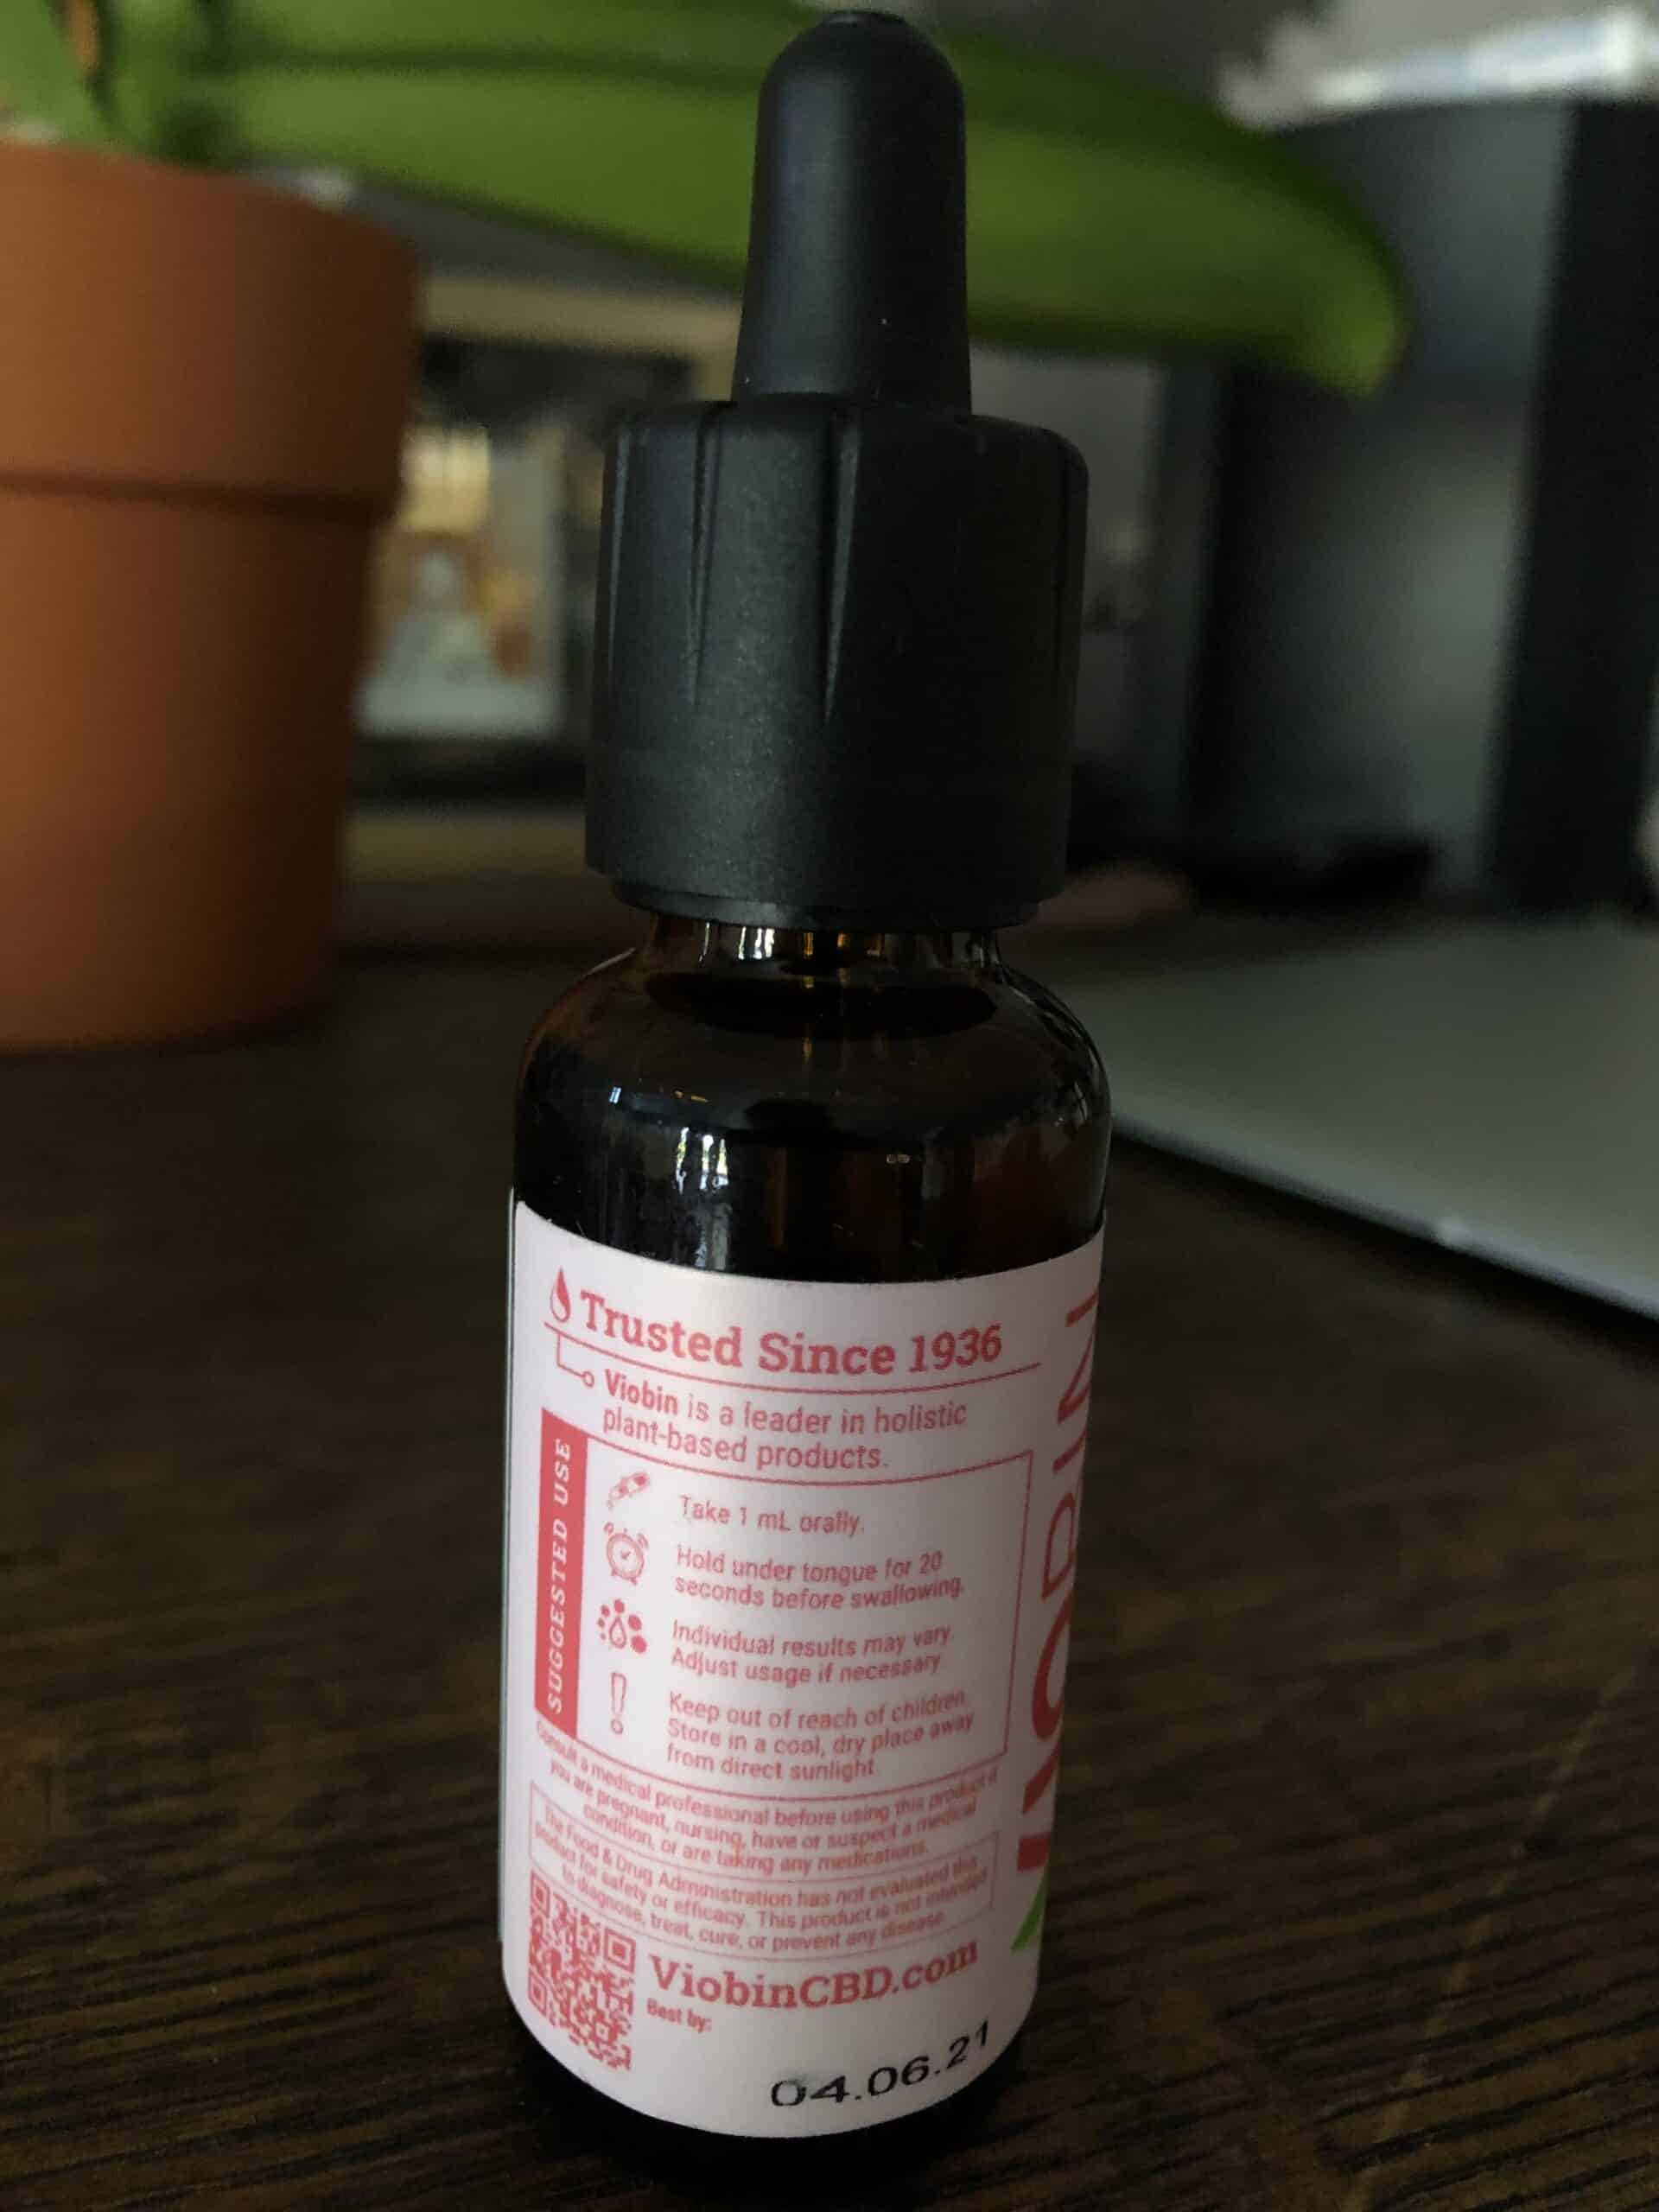 viobin full spectrum guava strawberry cbd oil 1,500 mg review save on cannabis testing process